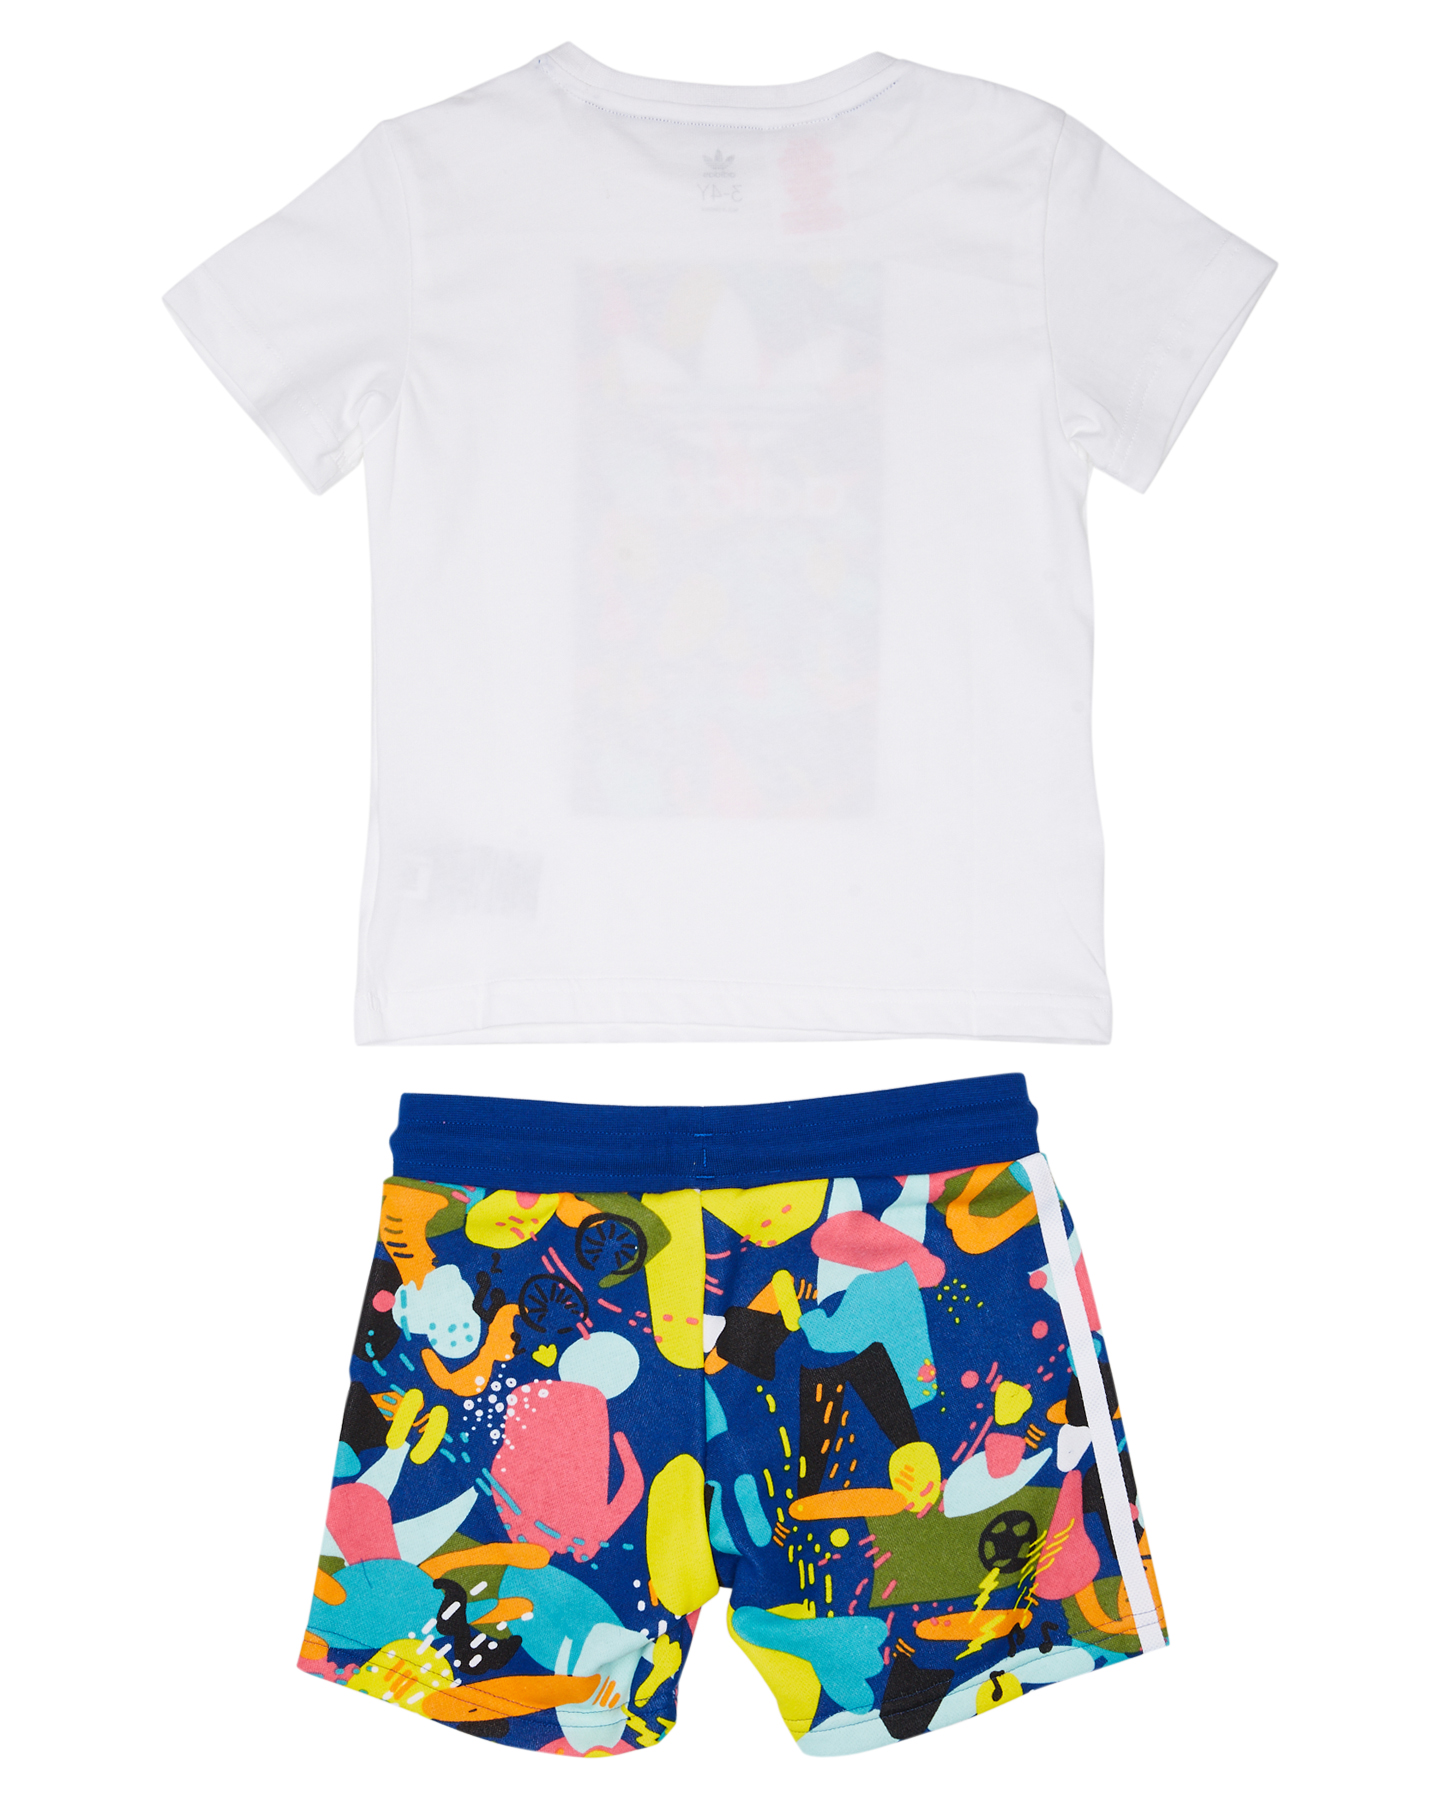 Adidas Boys Short Set - Kids - White Multicolor | SurfStitch